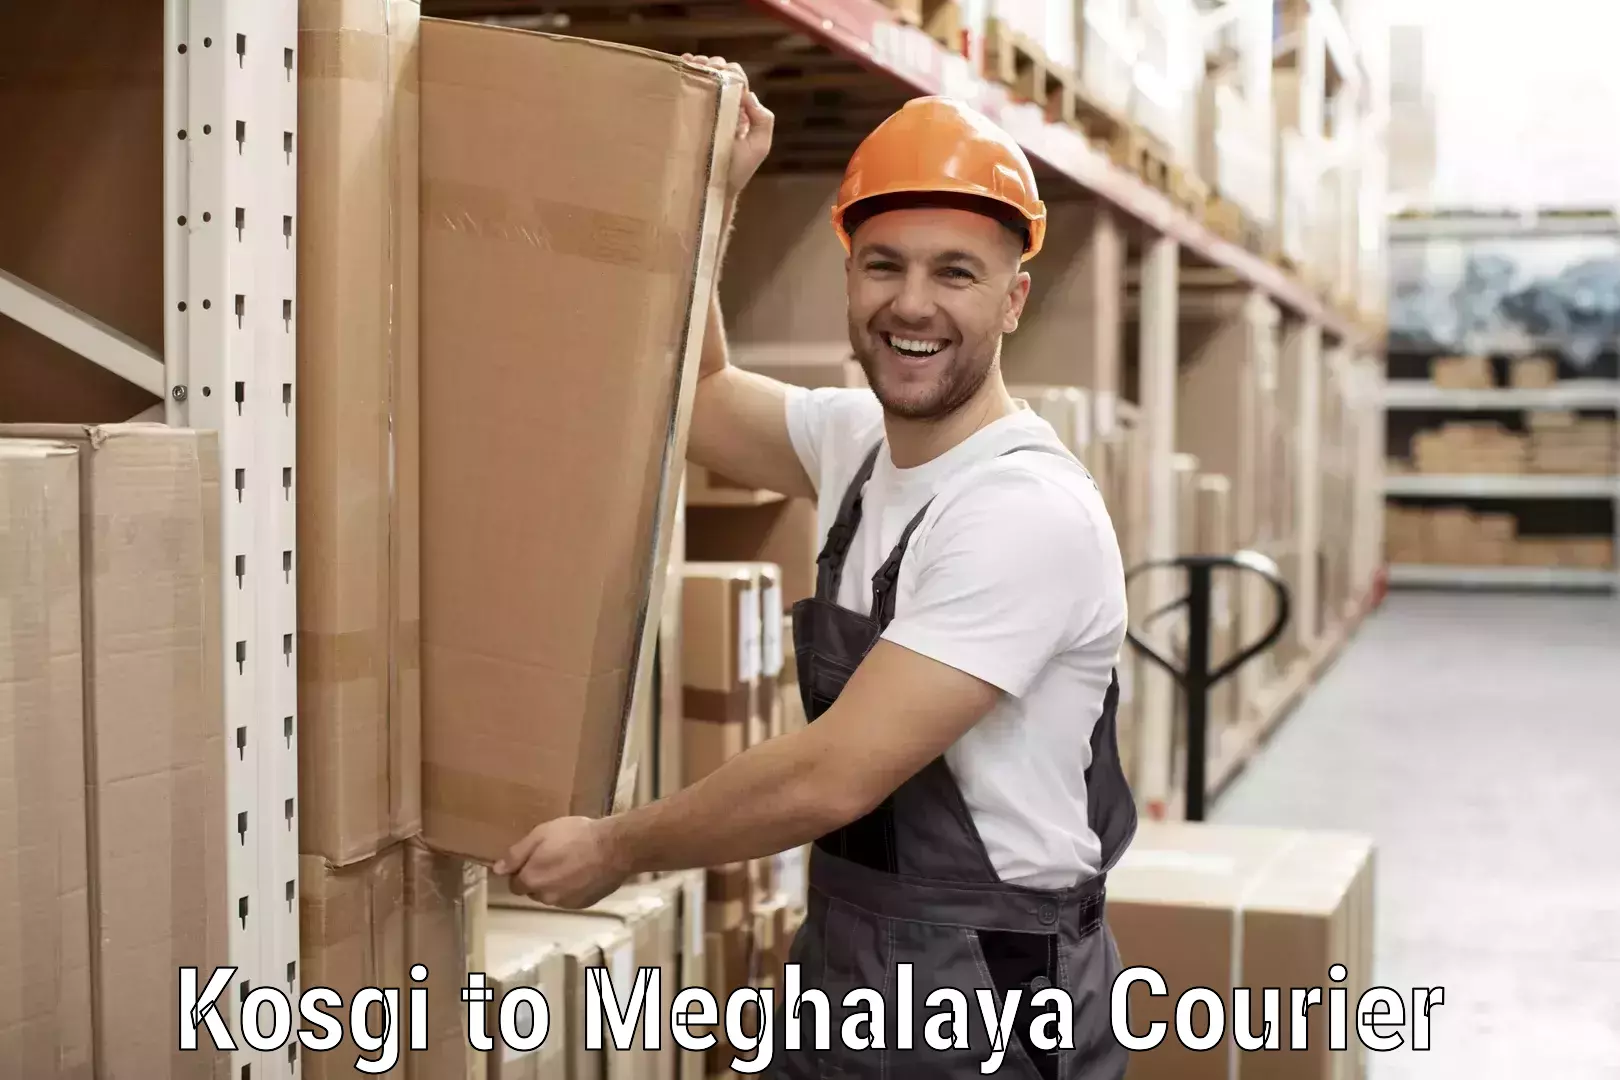 Lightweight courier Kosgi to Meghalaya